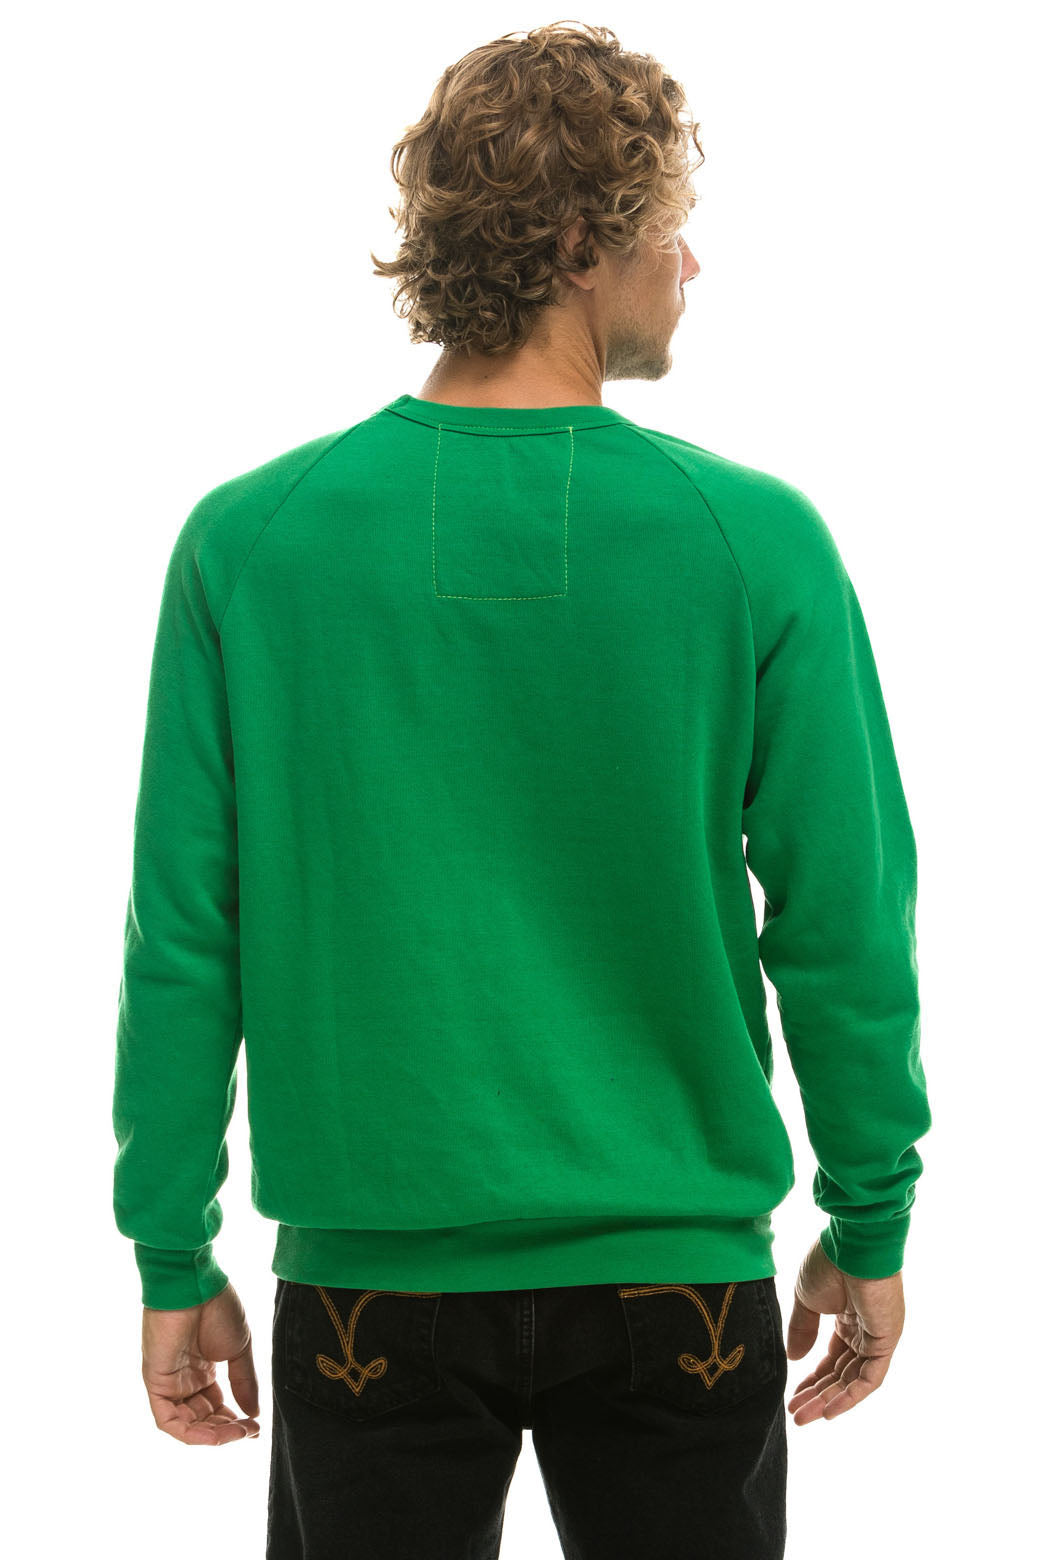 BOLT CREW SWEATSHIRT - KELLY GREEN Sweatshirt Aviator Nation 